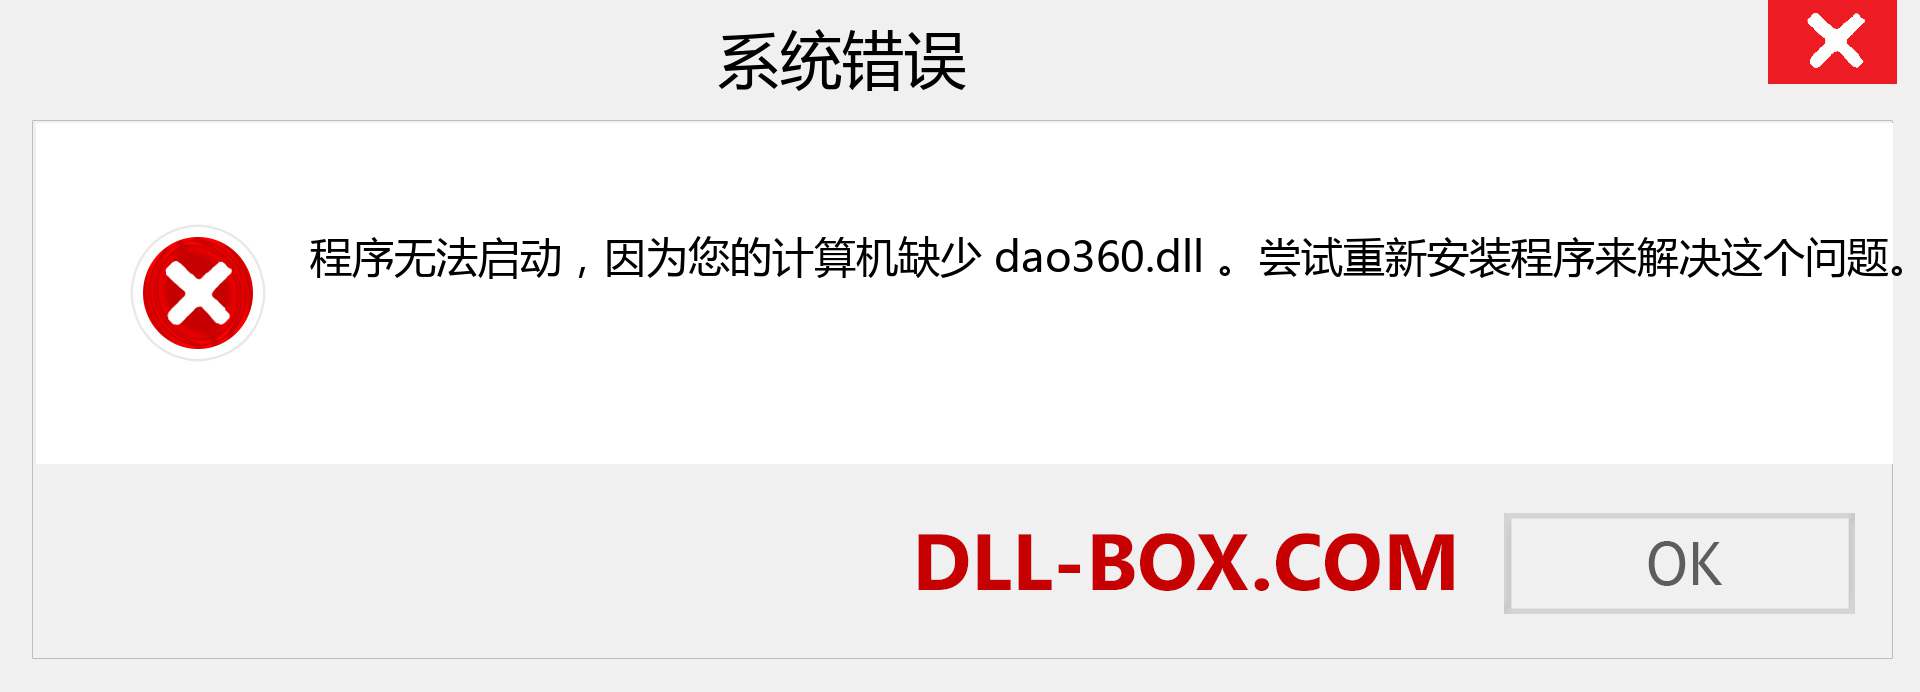 dao360.dll 文件丢失？。 适用于 Windows 7、8、10 的下载 - 修复 Windows、照片、图像上的 dao360 dll 丢失错误